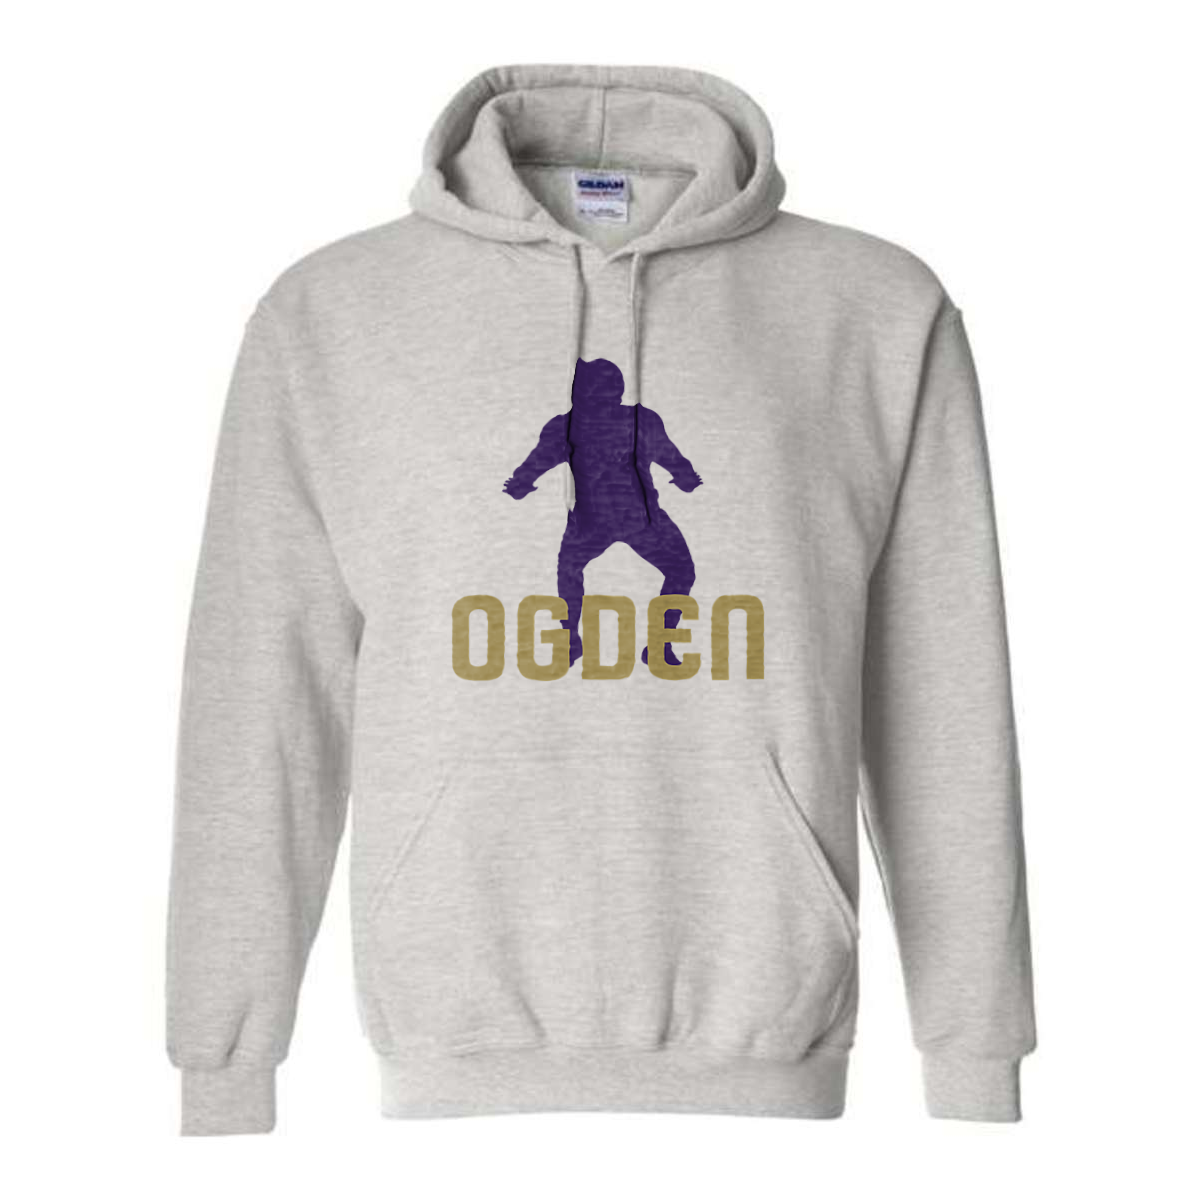 GT Ogden Logo Hoodie